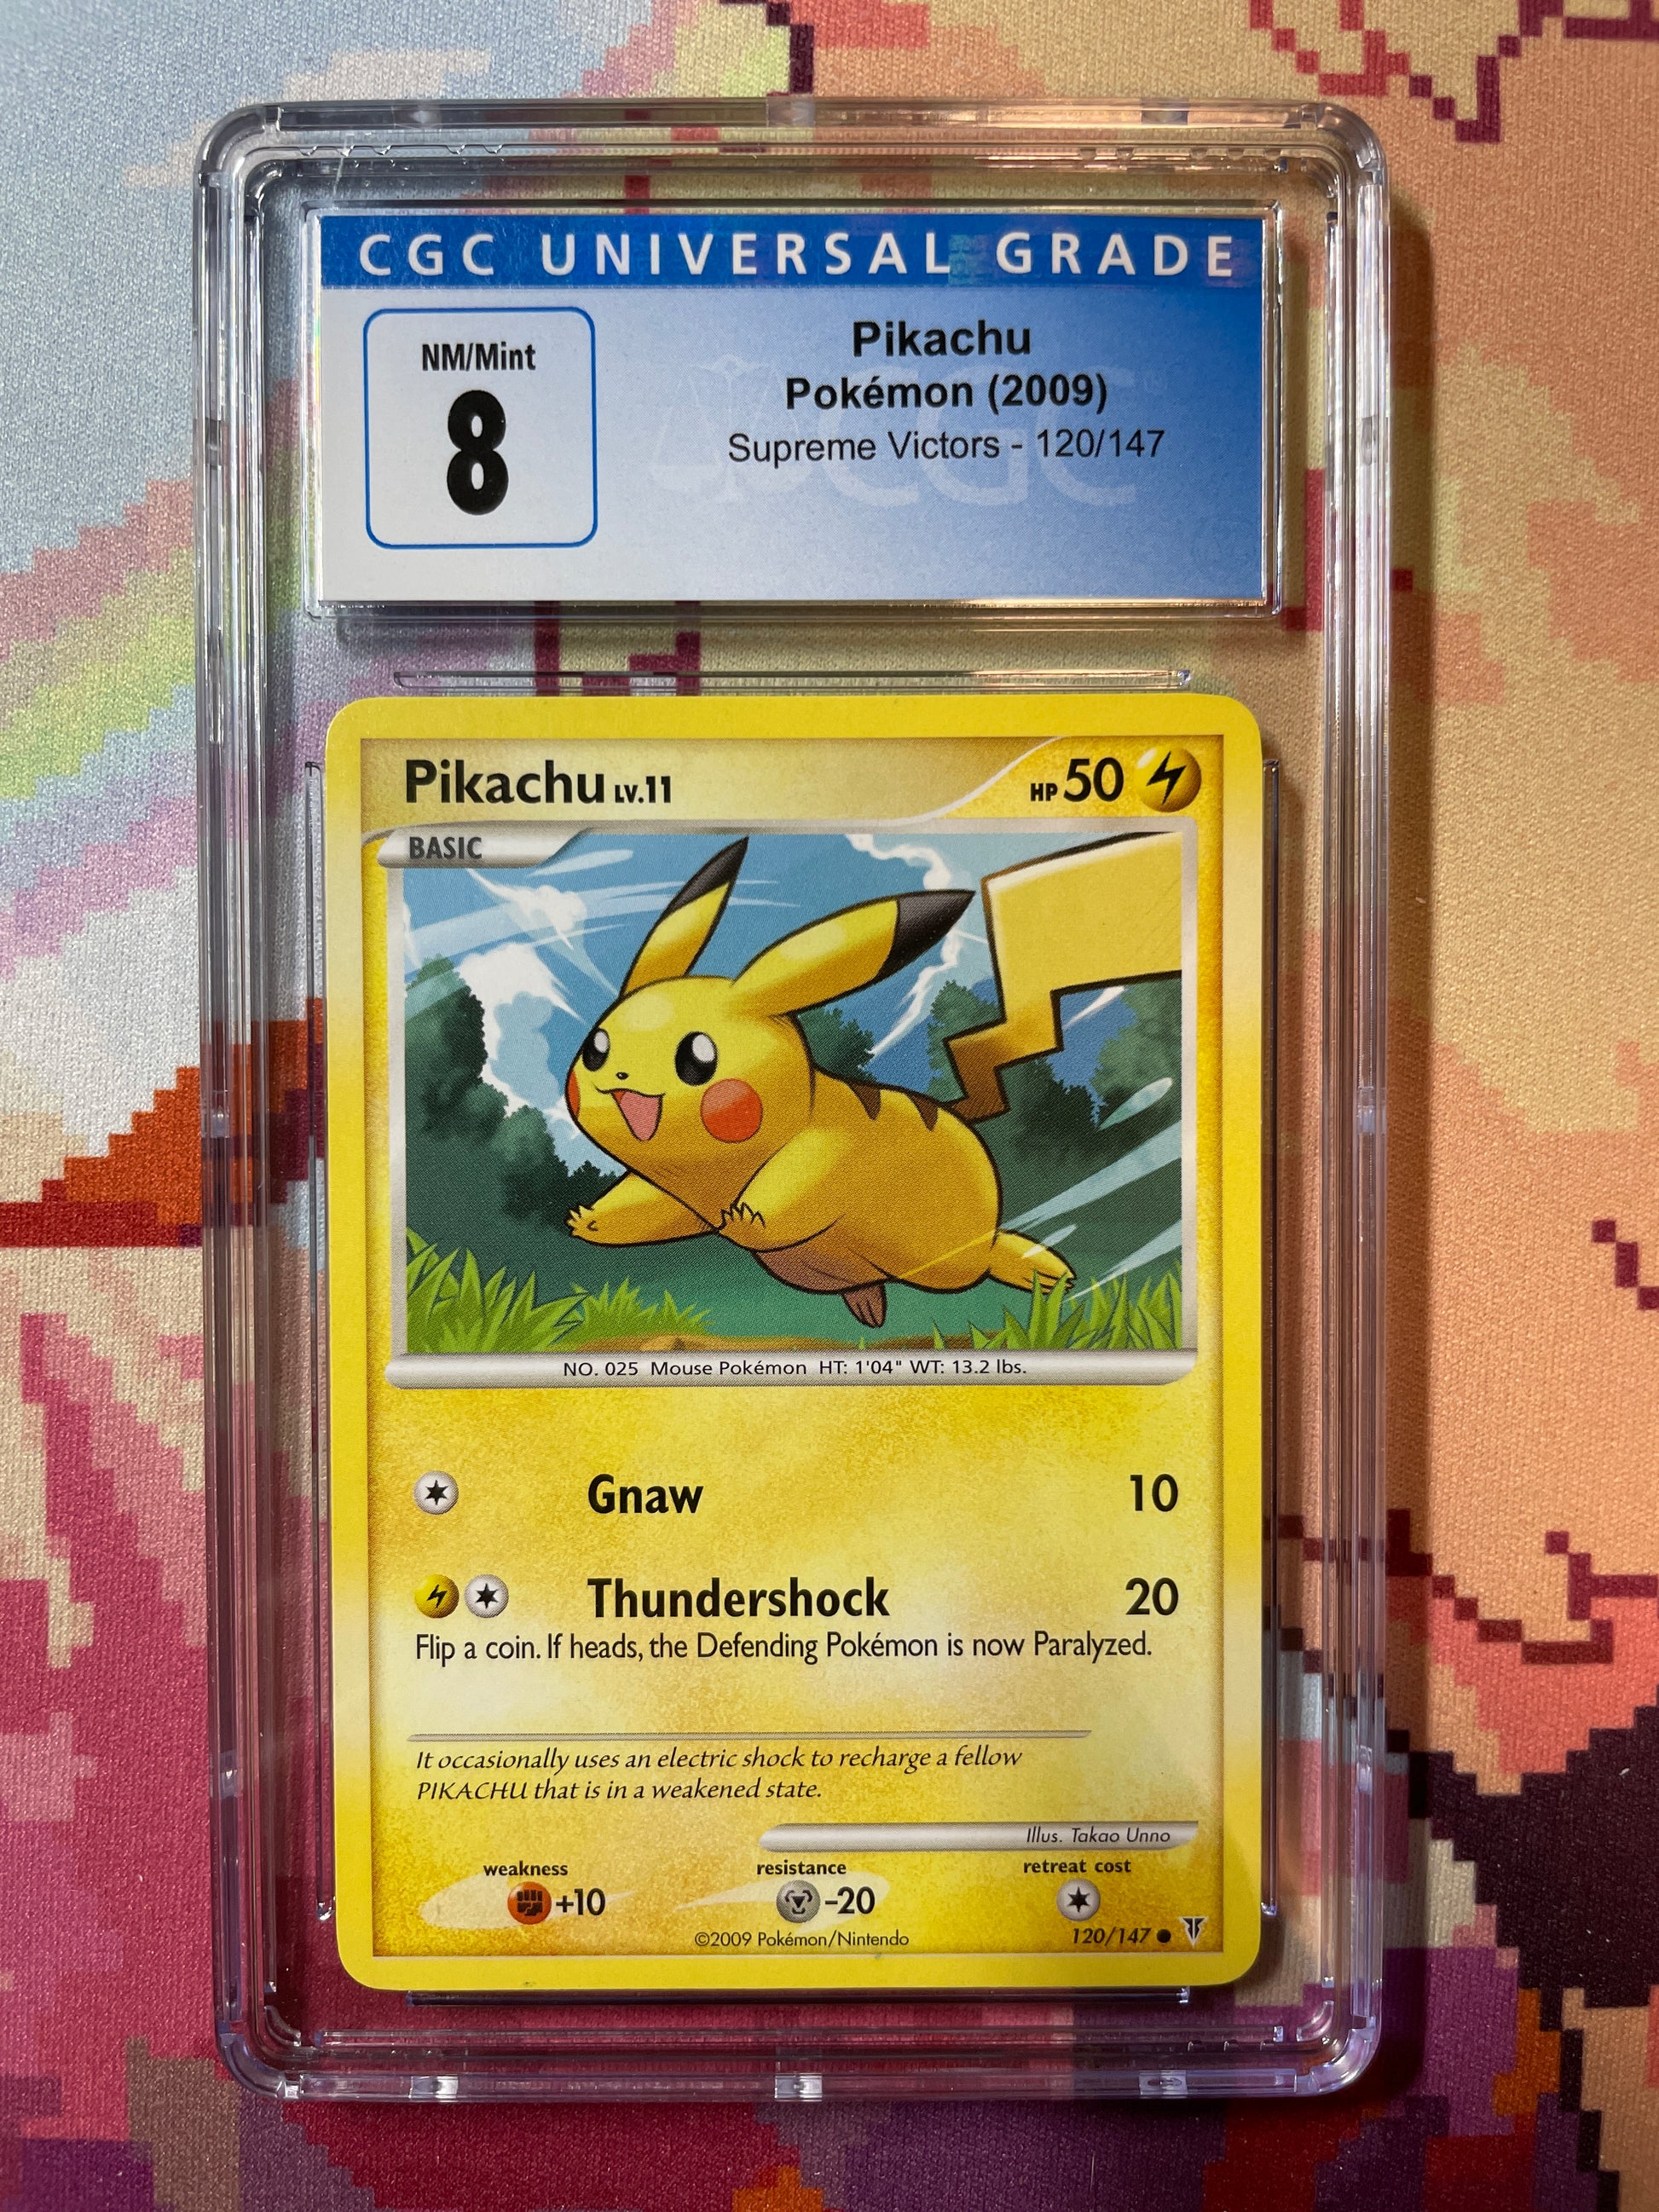 2009 Pokémon Supreme Victors Pikachu 120/147 CGC 8 NM/Mint